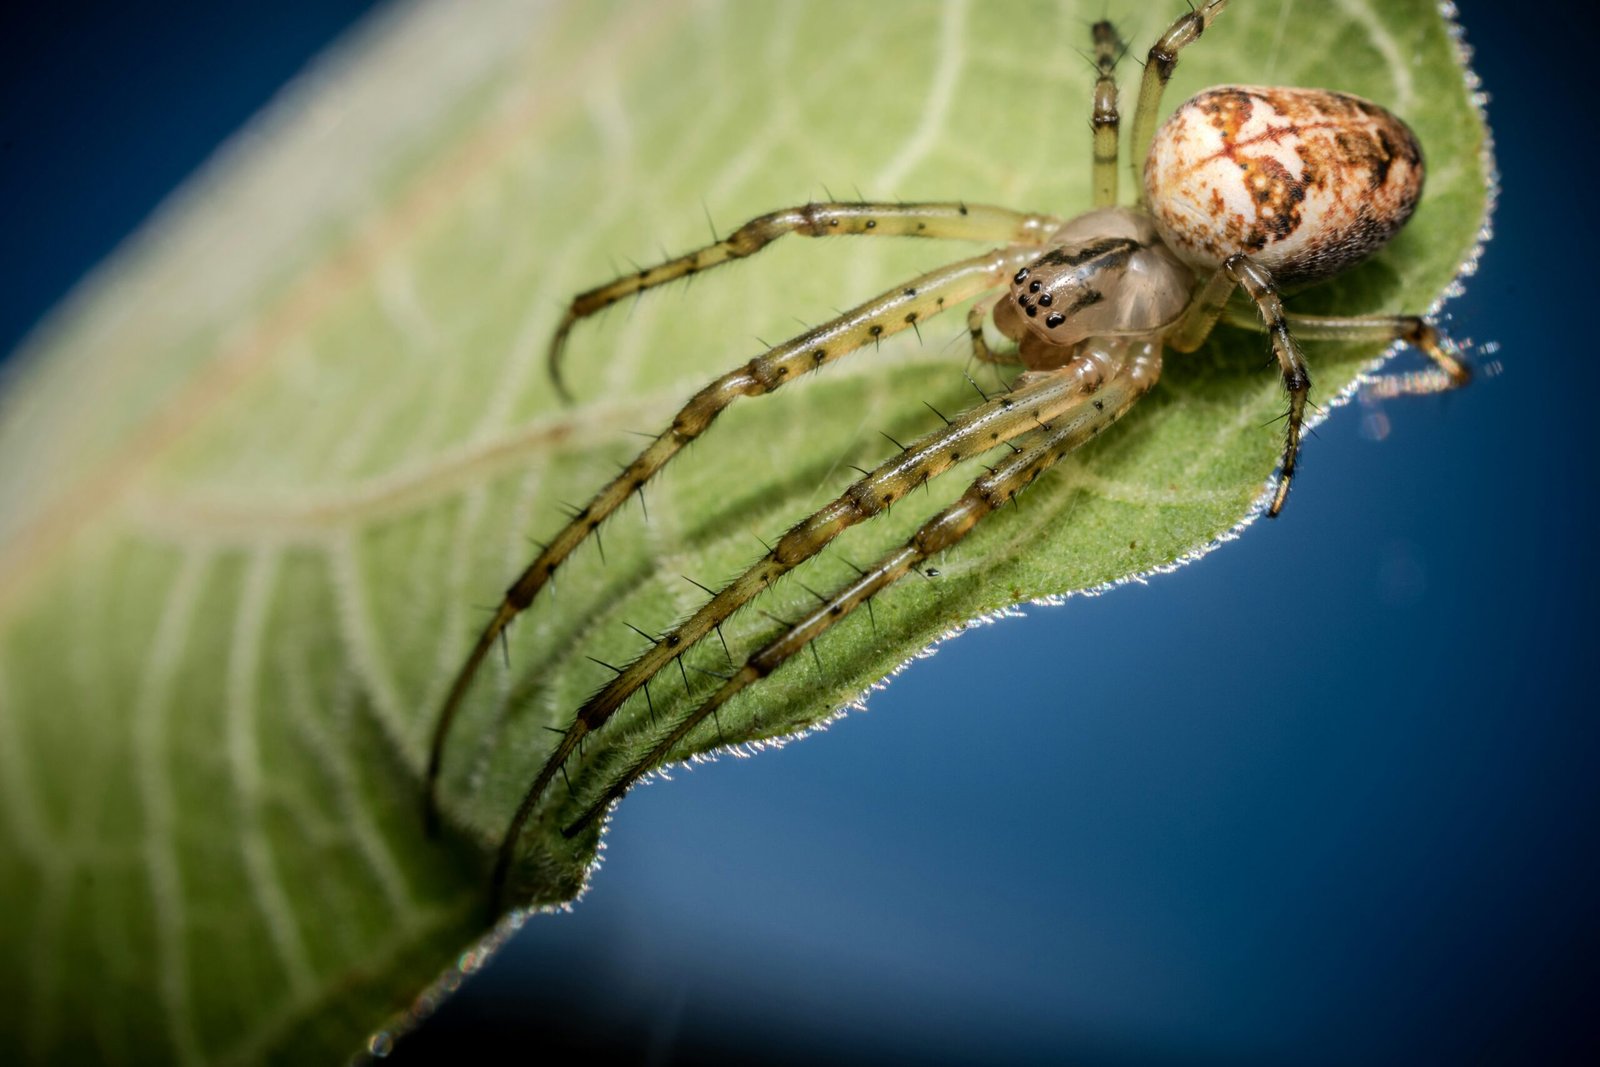 How Do Tarantulas Cope With Threats From Predatory Arachnids Like Tailless Whip Scorpions?